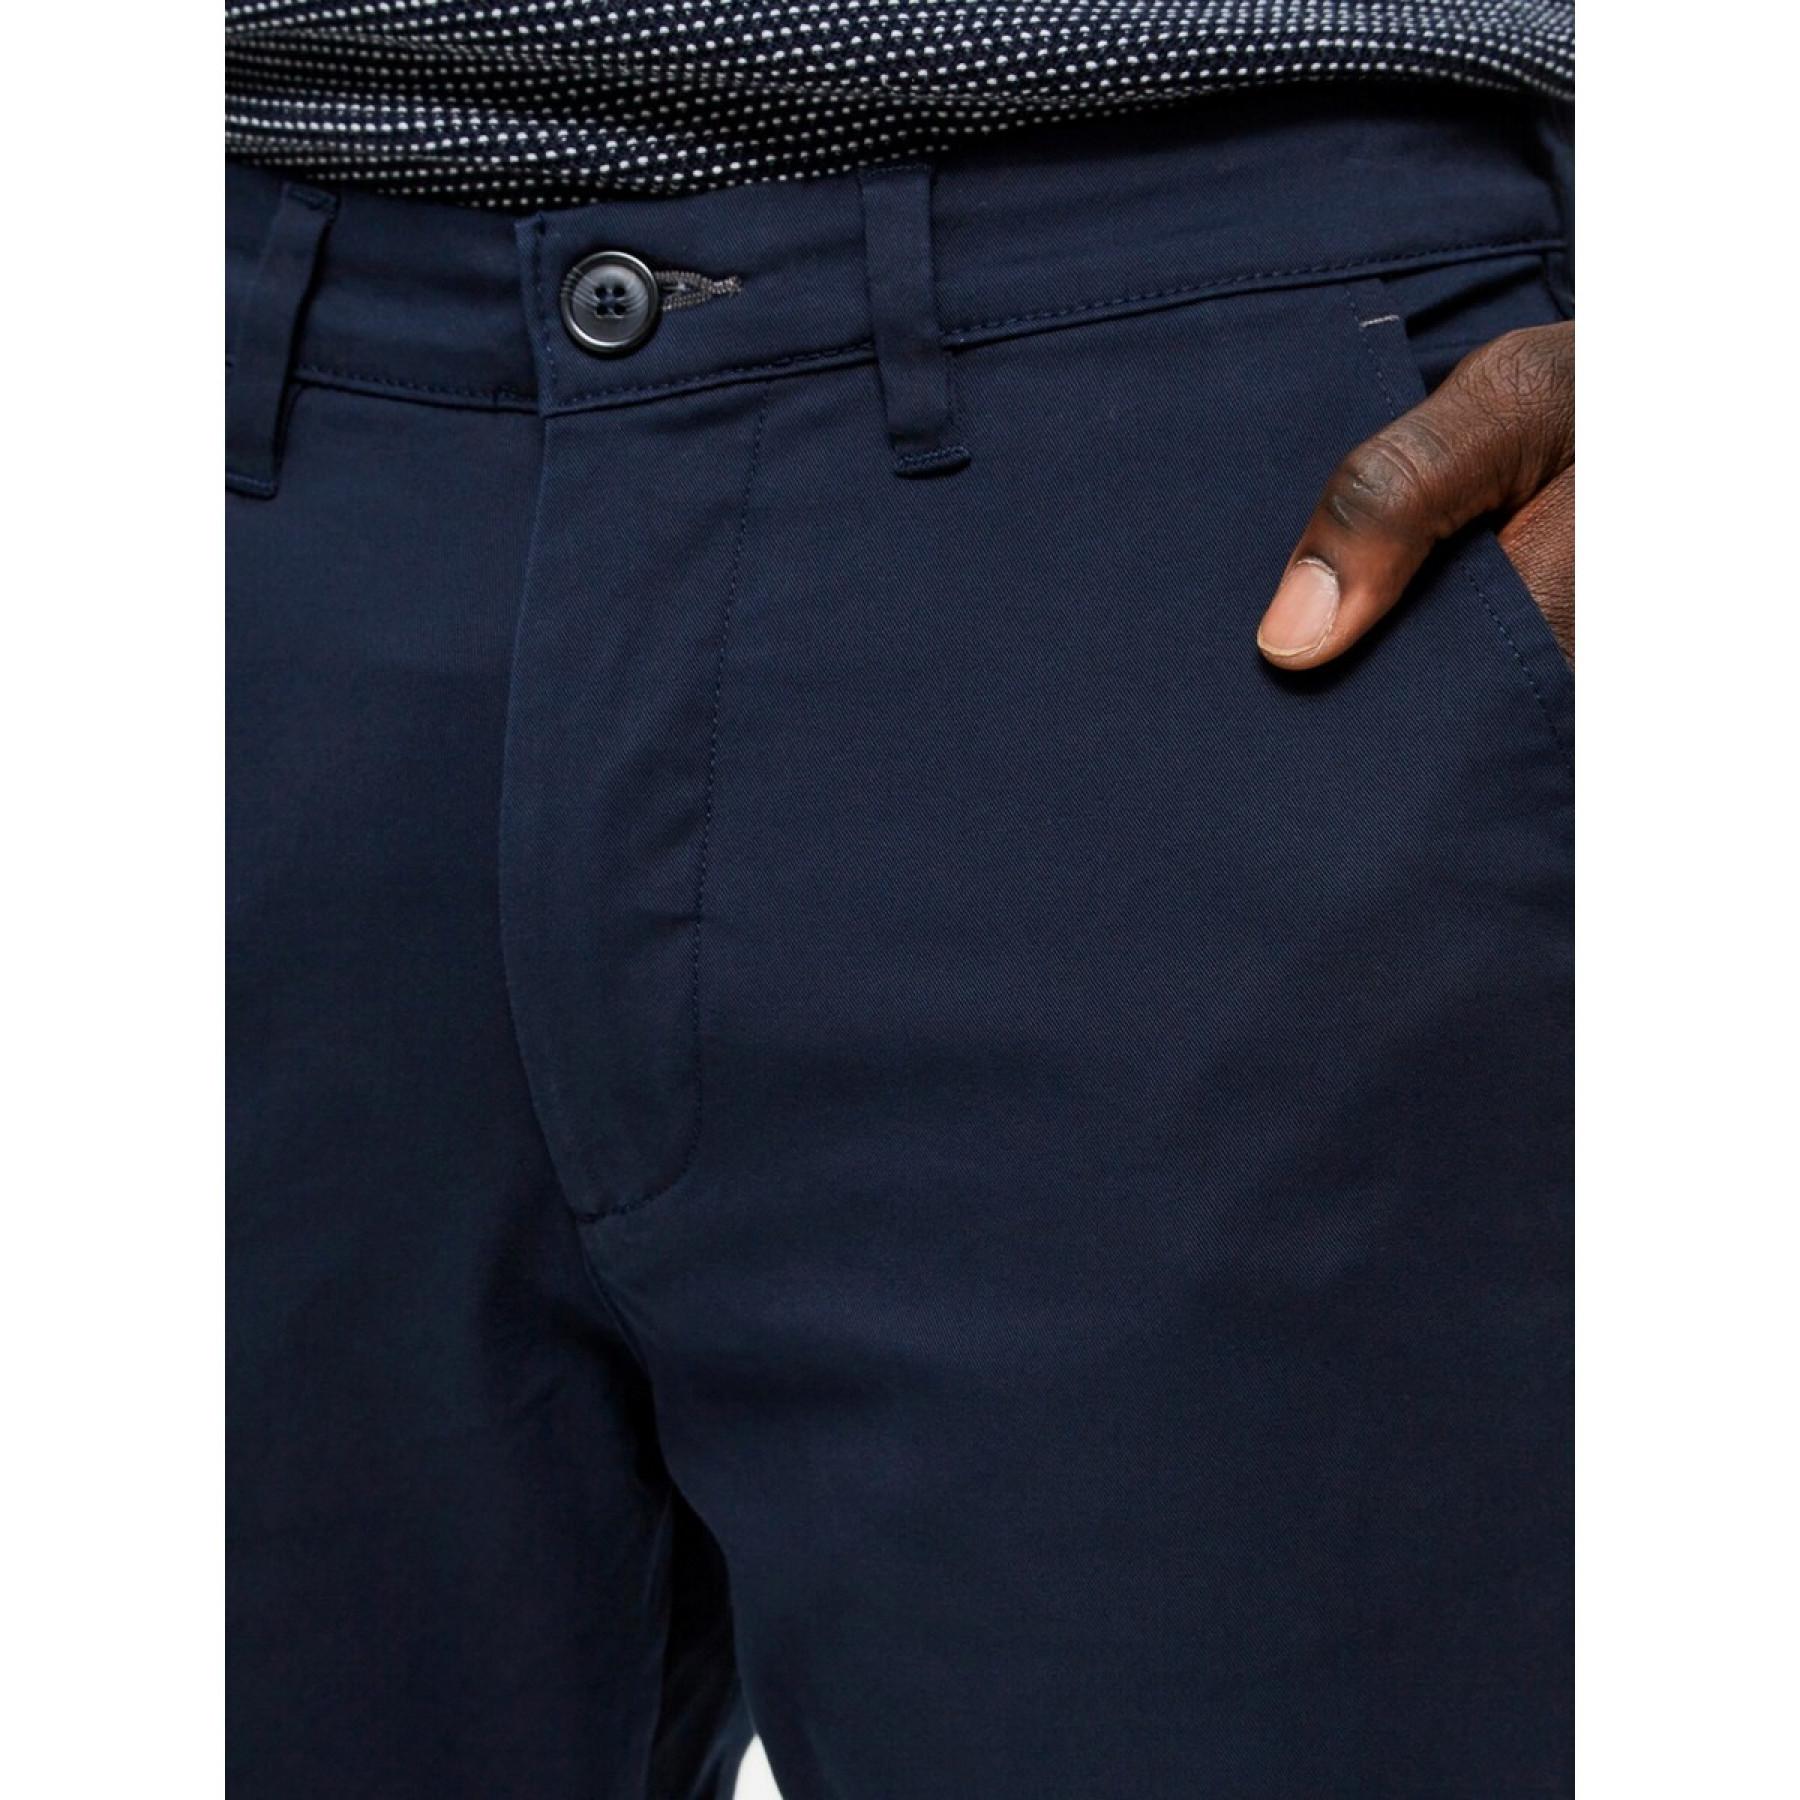 Pantalon Selected chino Miles flex slim